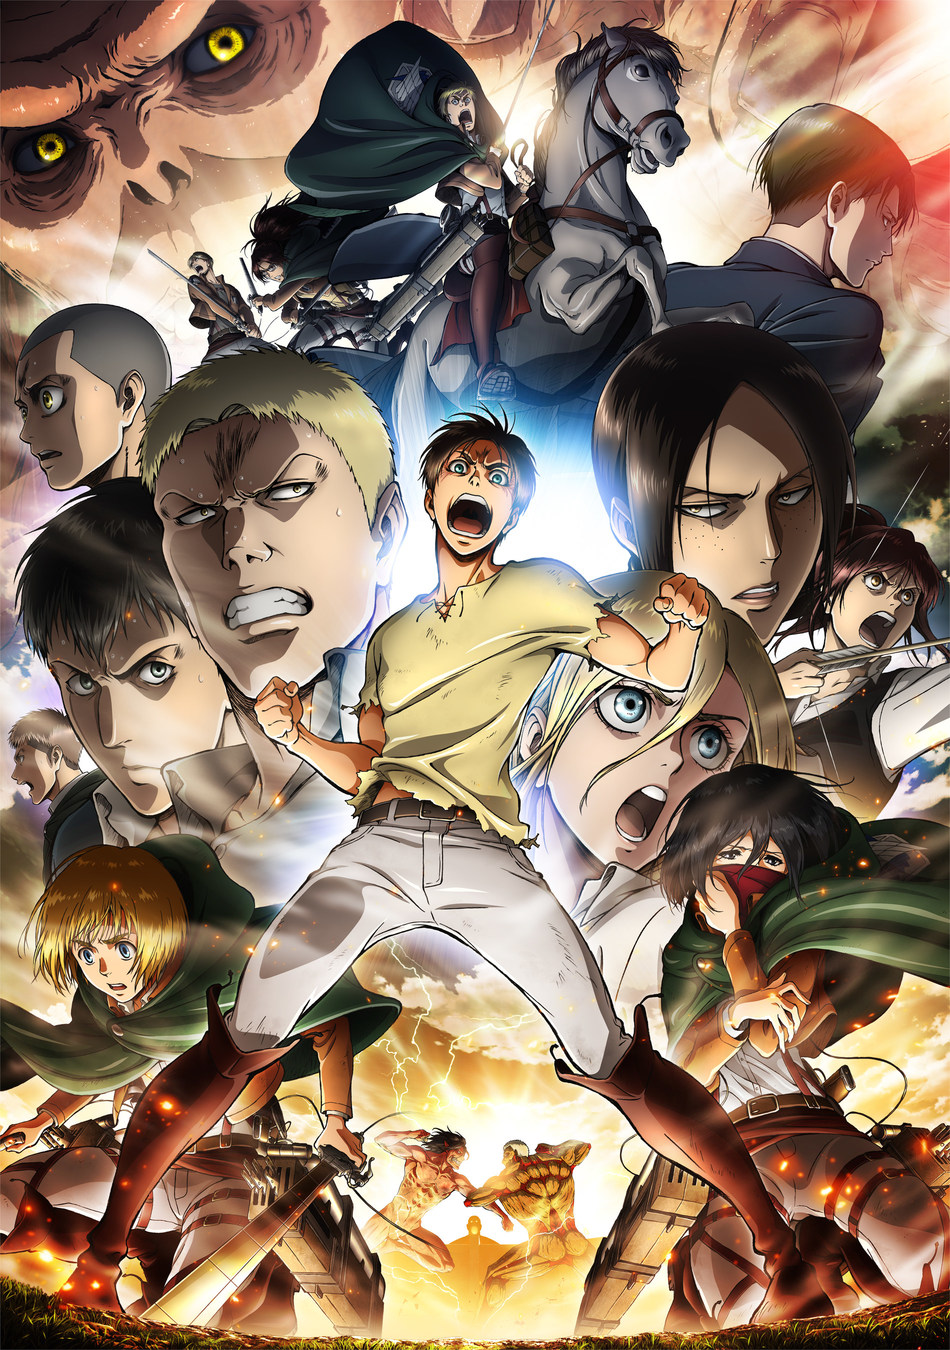 "Attack On Titan" Season 2 To Premiere Saturday April 1 On FunimationNow, Hulu And Crunchyroll